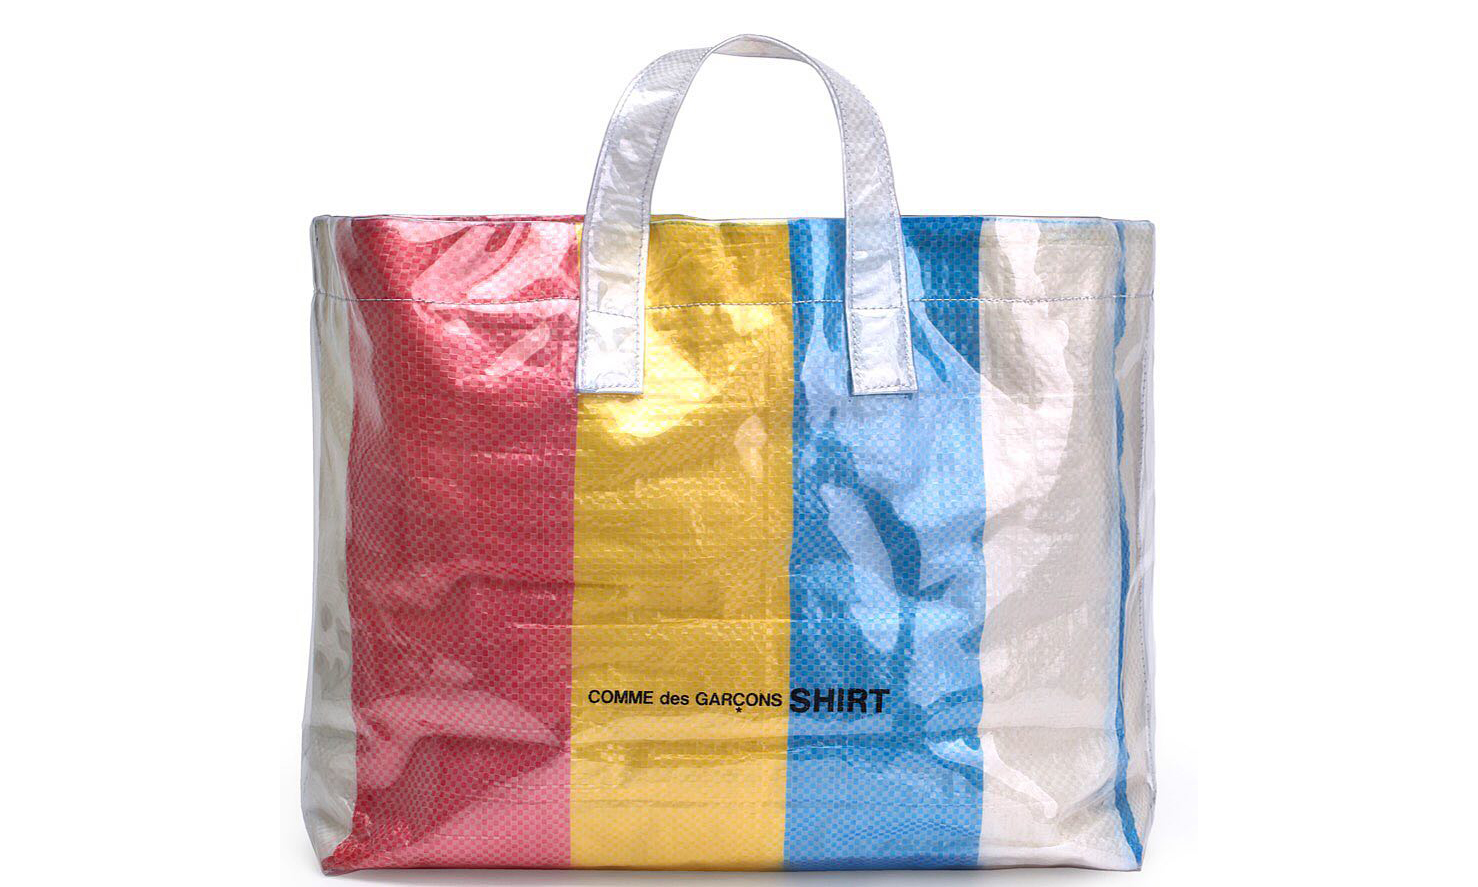 COMME des GARÇONS Shirt 出品的 “塑料袋” 又有新配色了